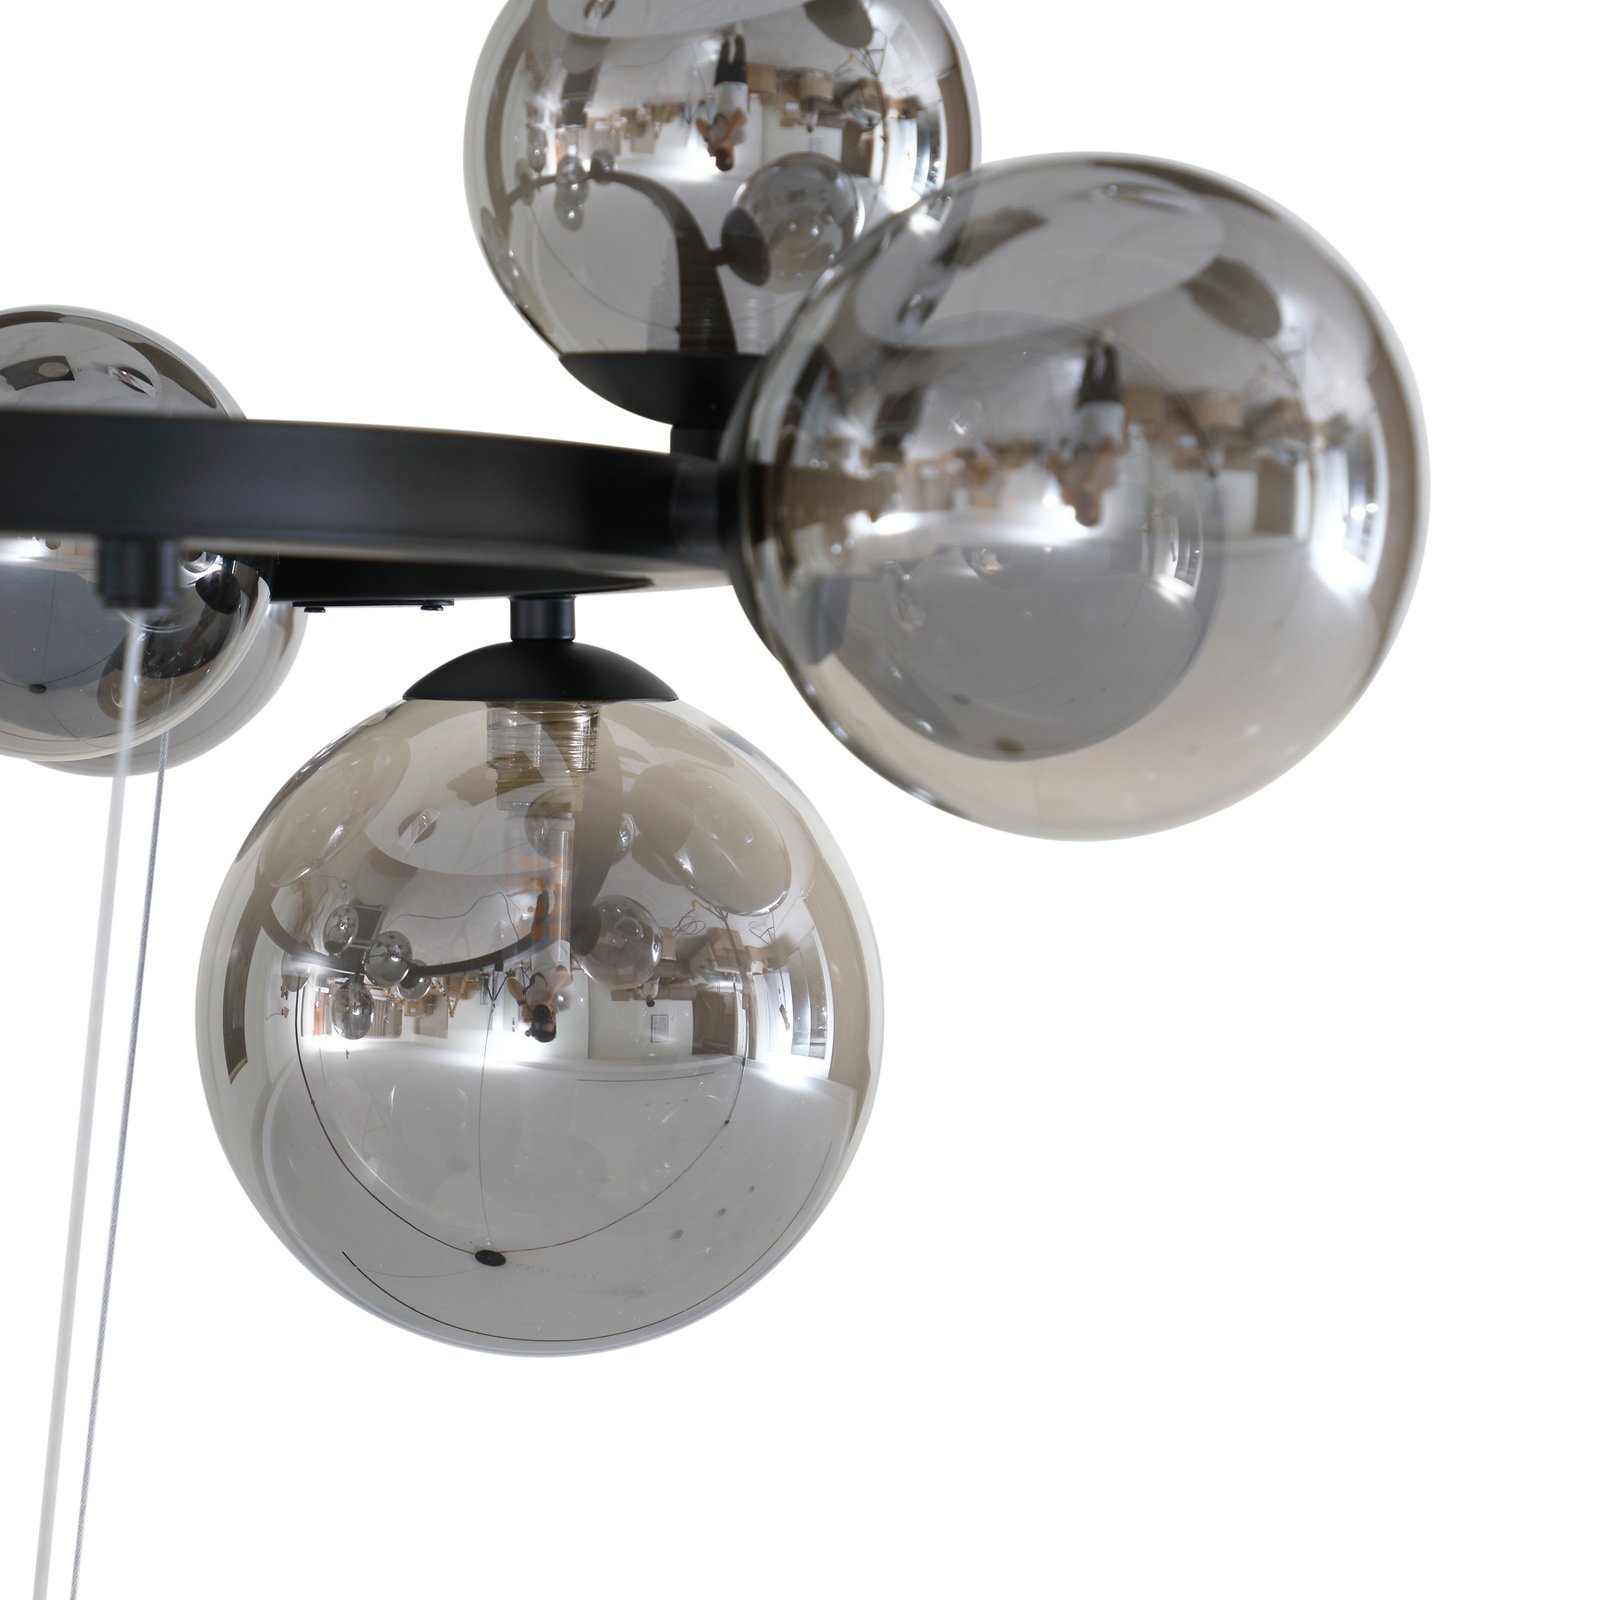 Lucande hanglamp Naelen, zwart/grijs, 64,3 cm, glas, G9